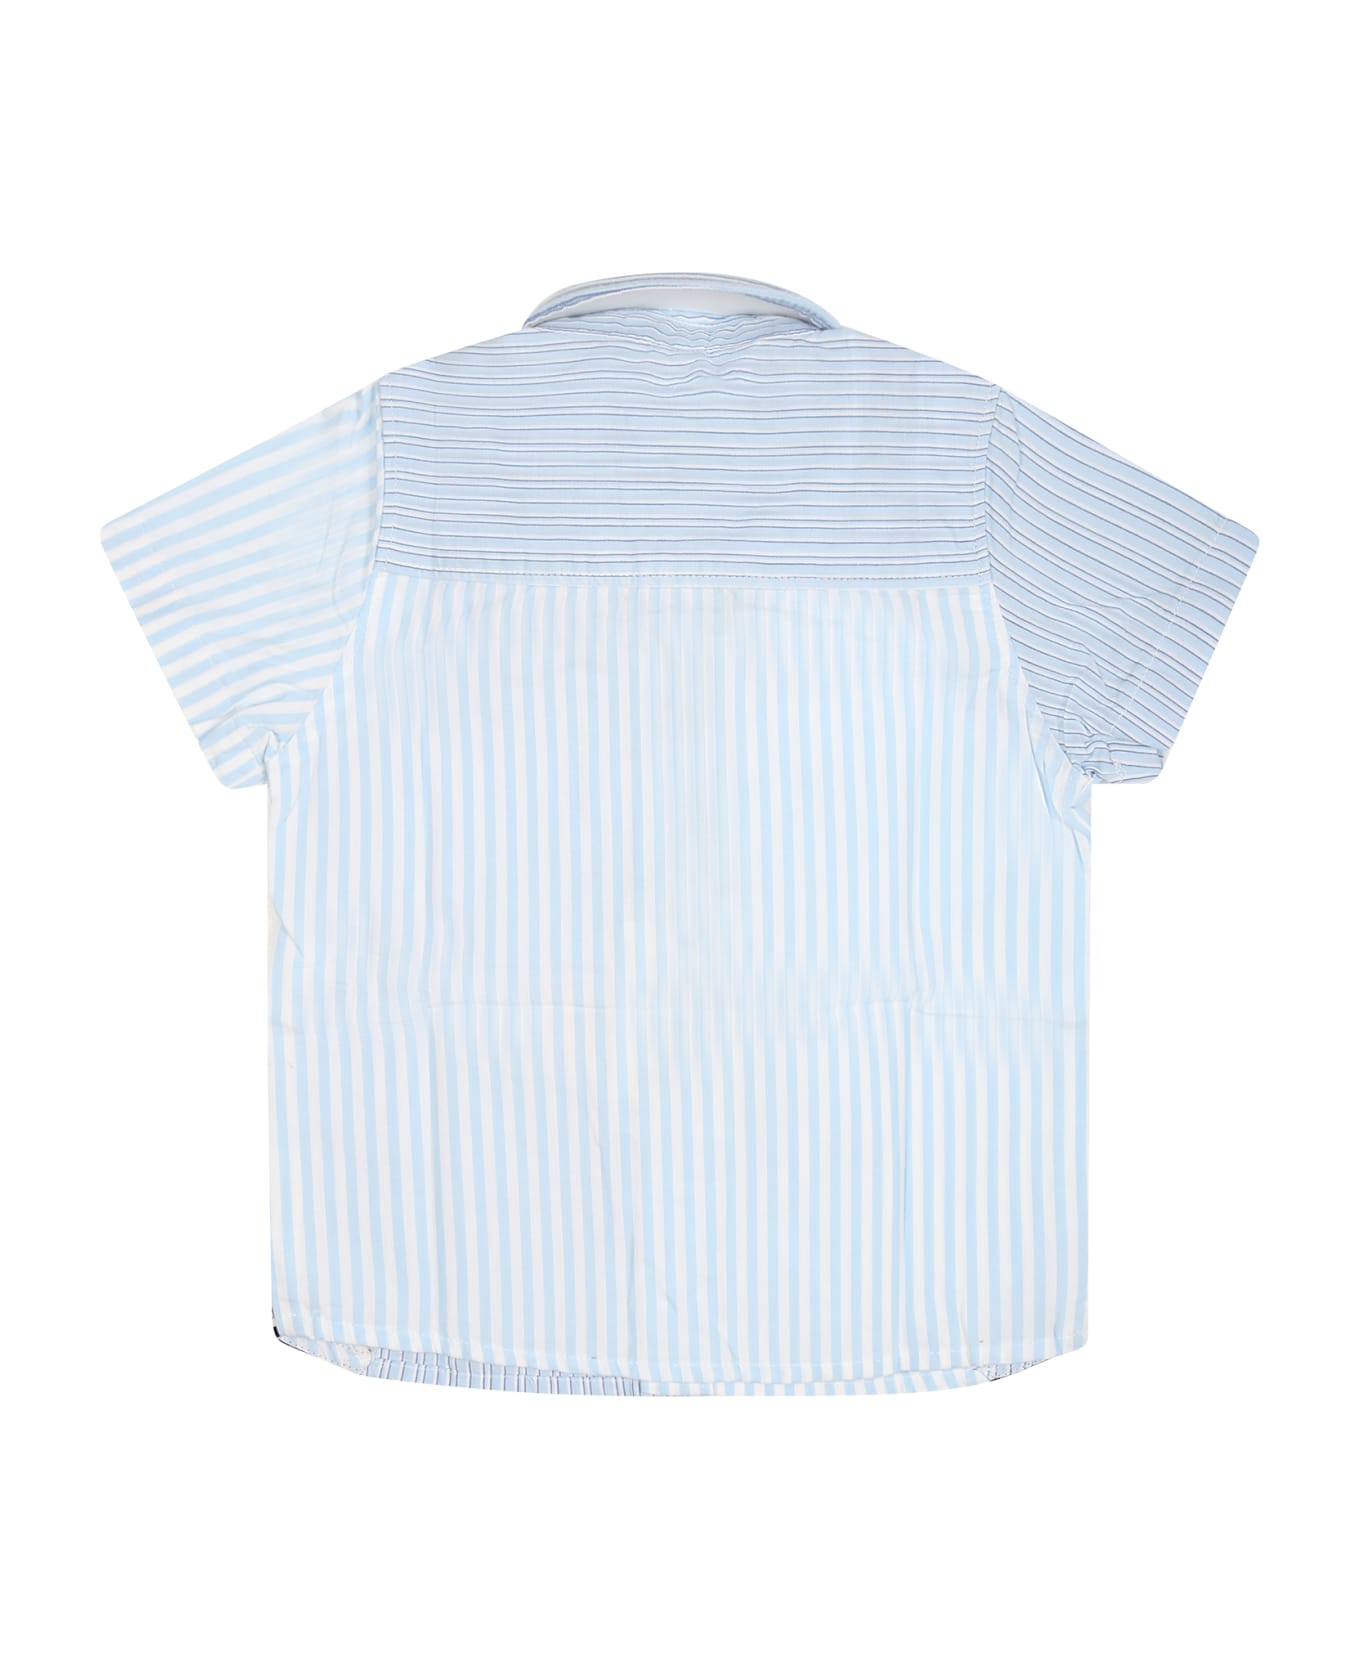 Hugo Boss Light Blue Shirt For Baby Boy With Stripes - Light Blue